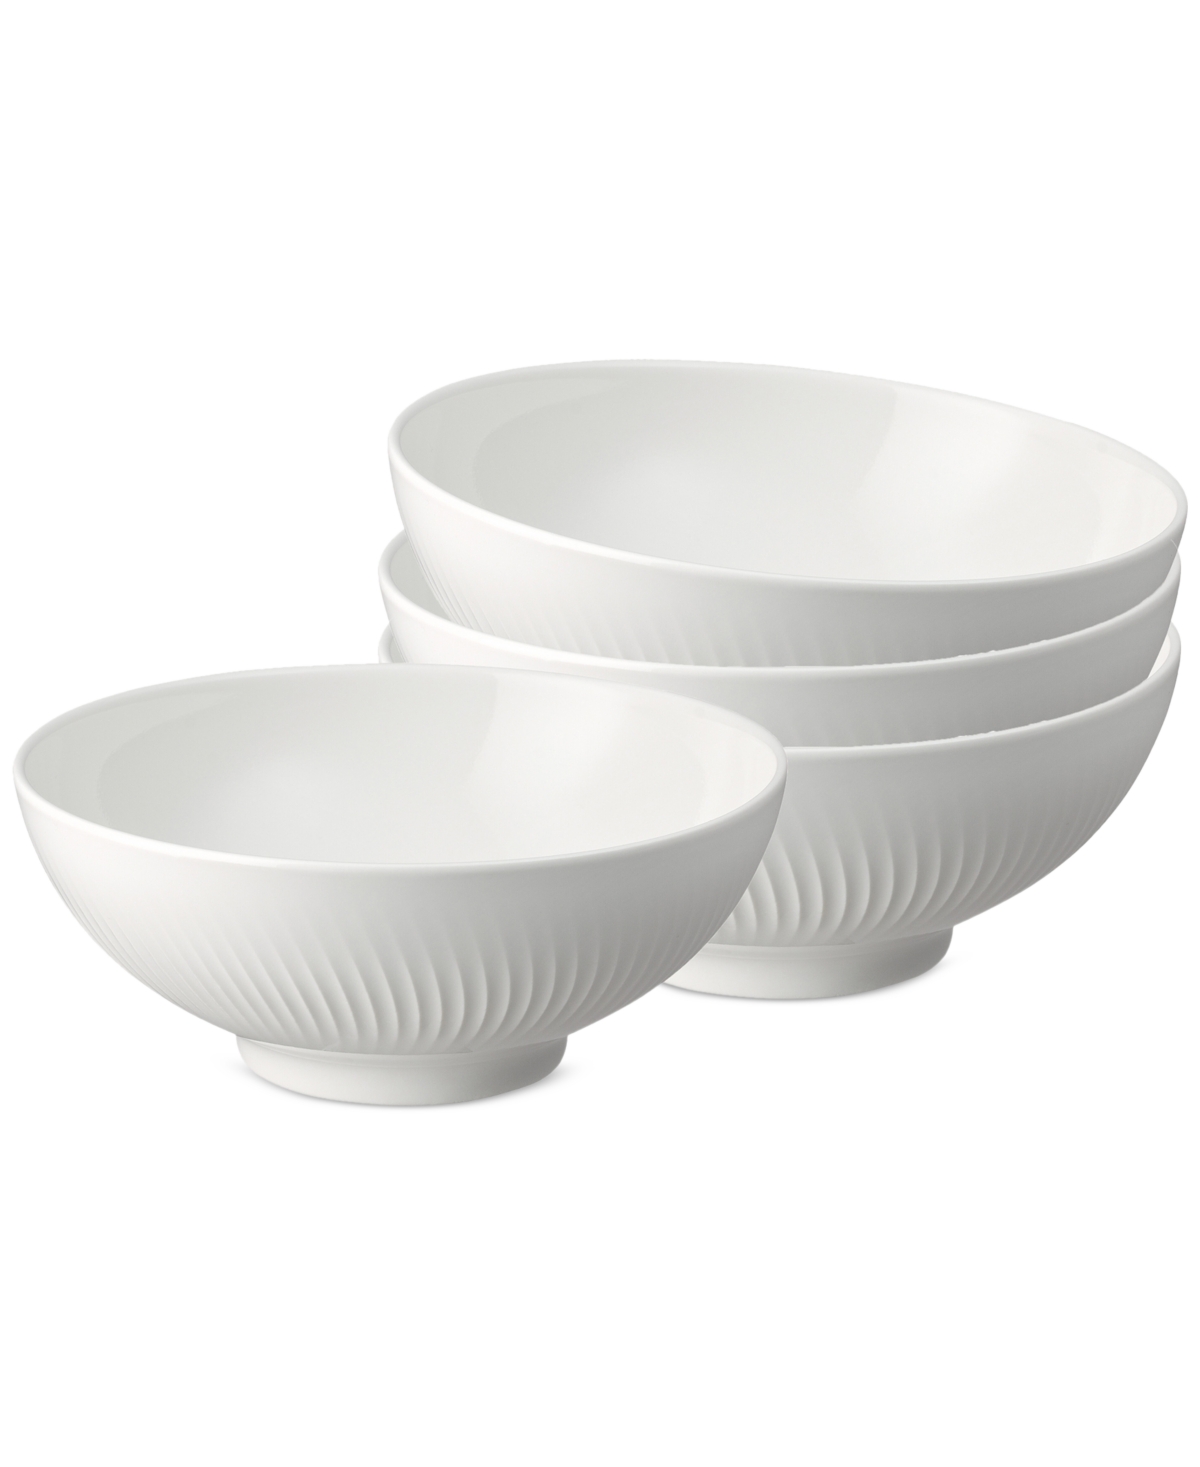 Porcelain Arc Collection Cereal Bowls, Set of 4 - Arc White